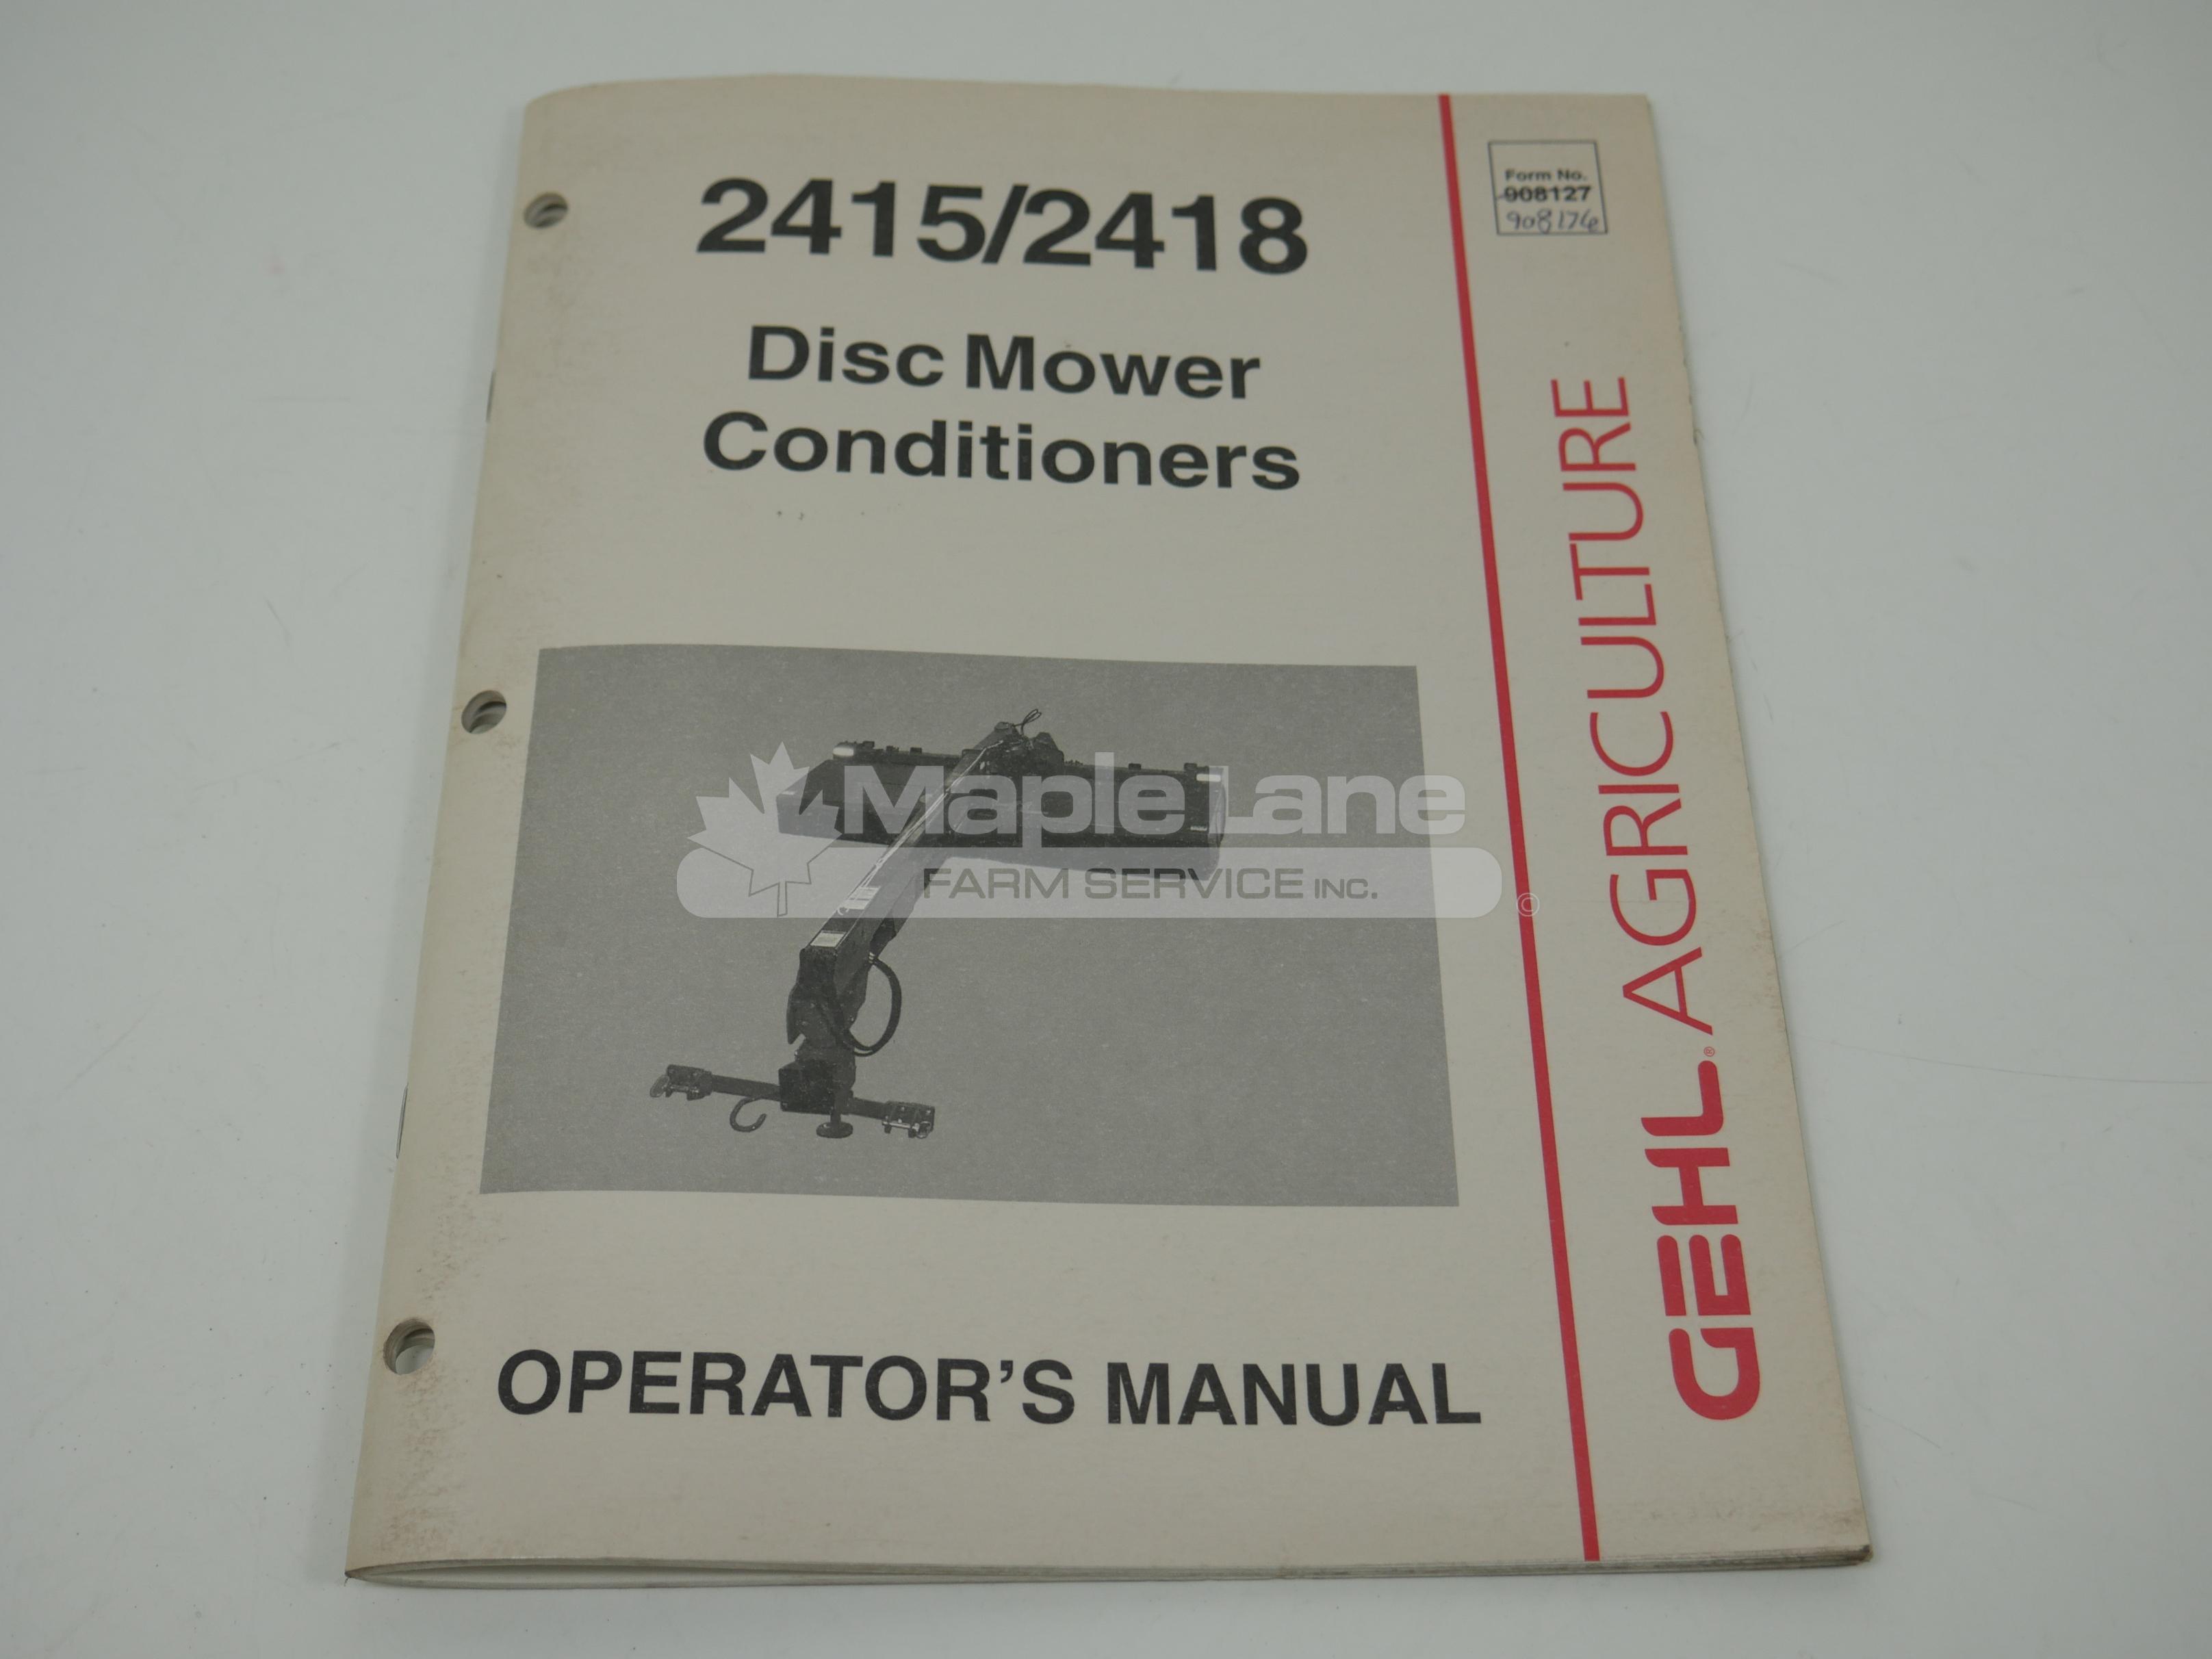 908176 Operator Manual